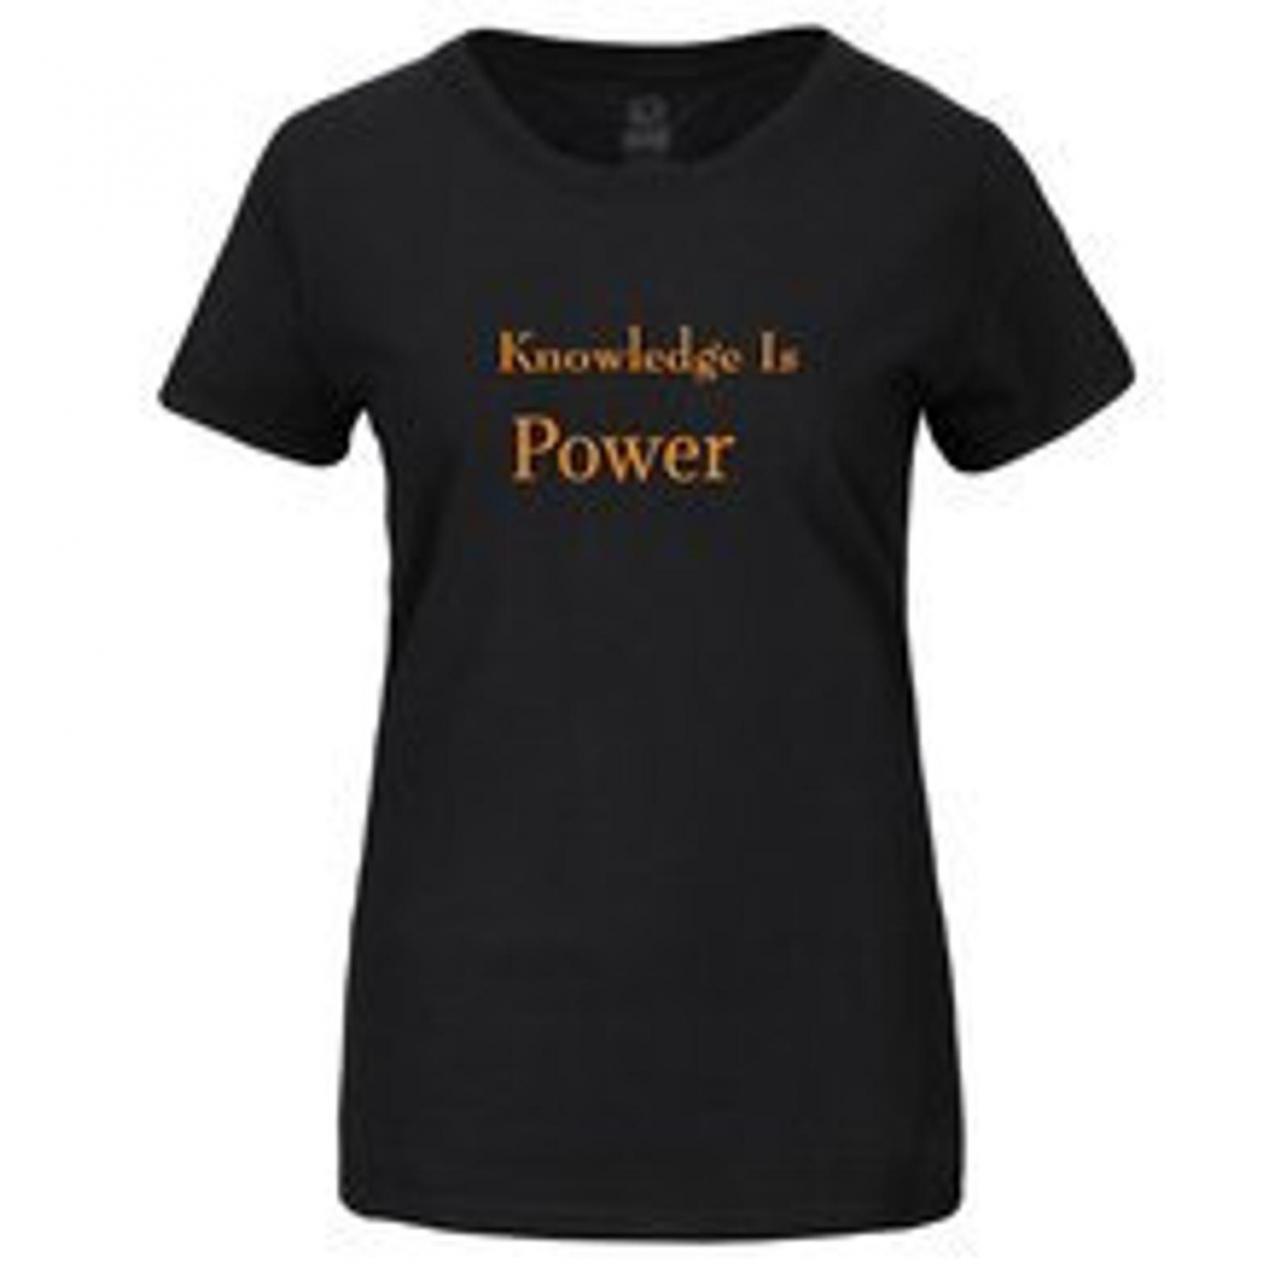 Knowledge Is Power Tshirt Graphic Tee T-shirt Motivational Graphic Tee Black Graphic Tee